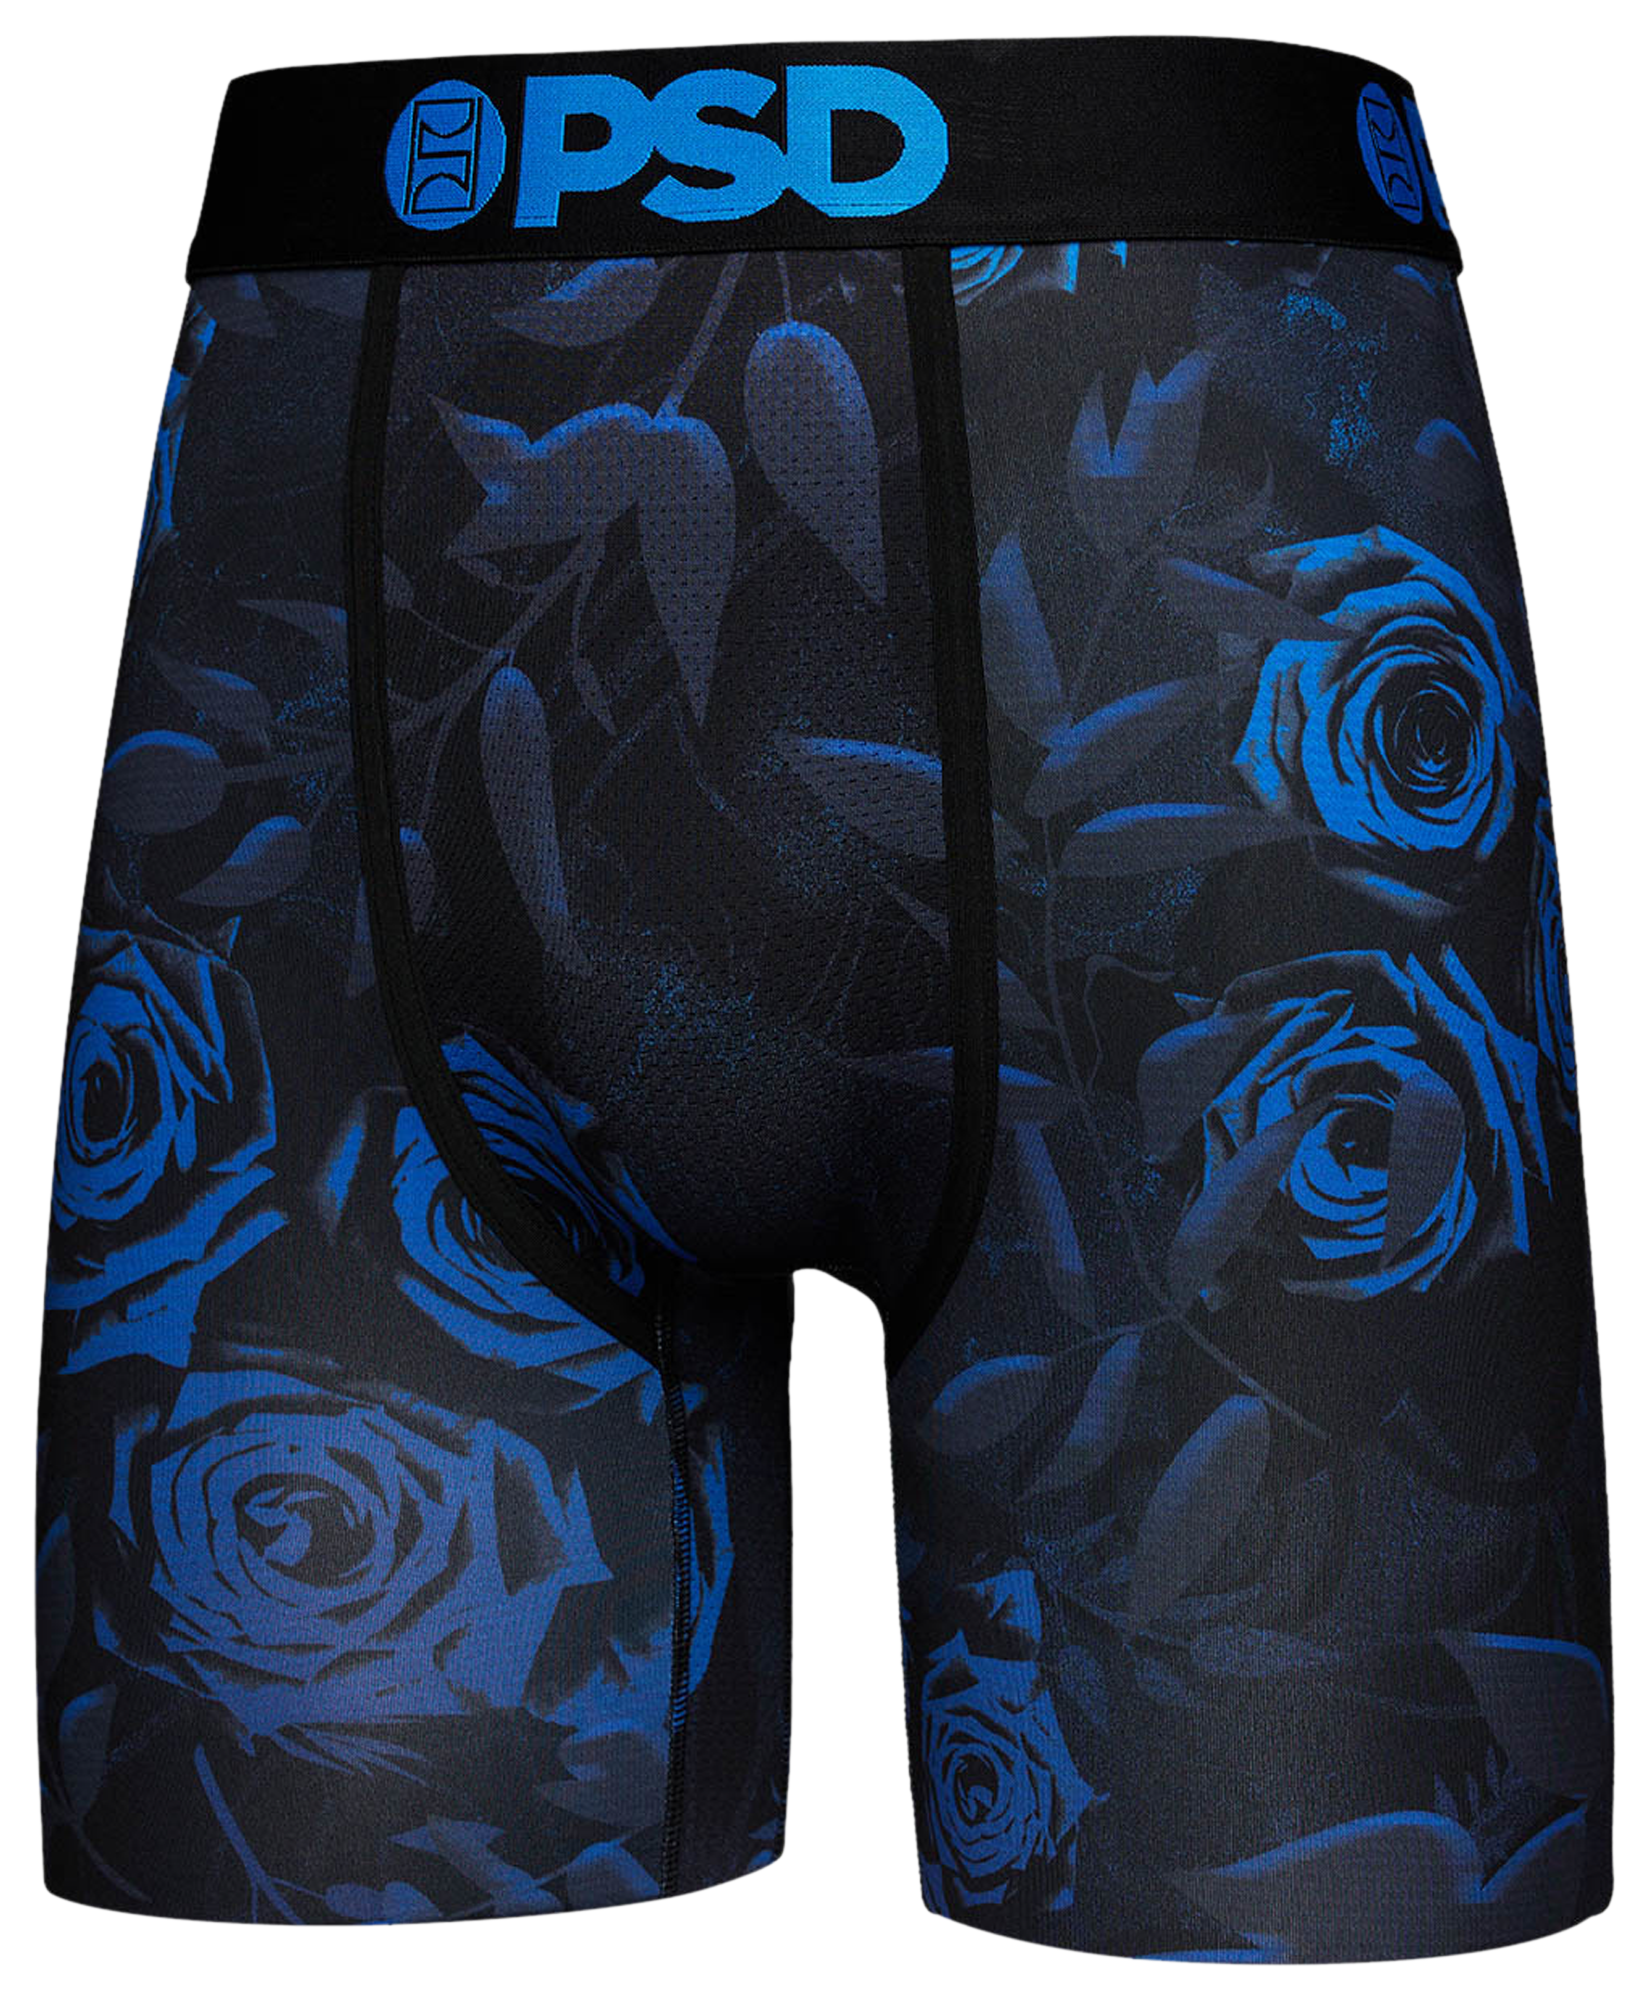 PSD Bronny Steel Floral Underwear